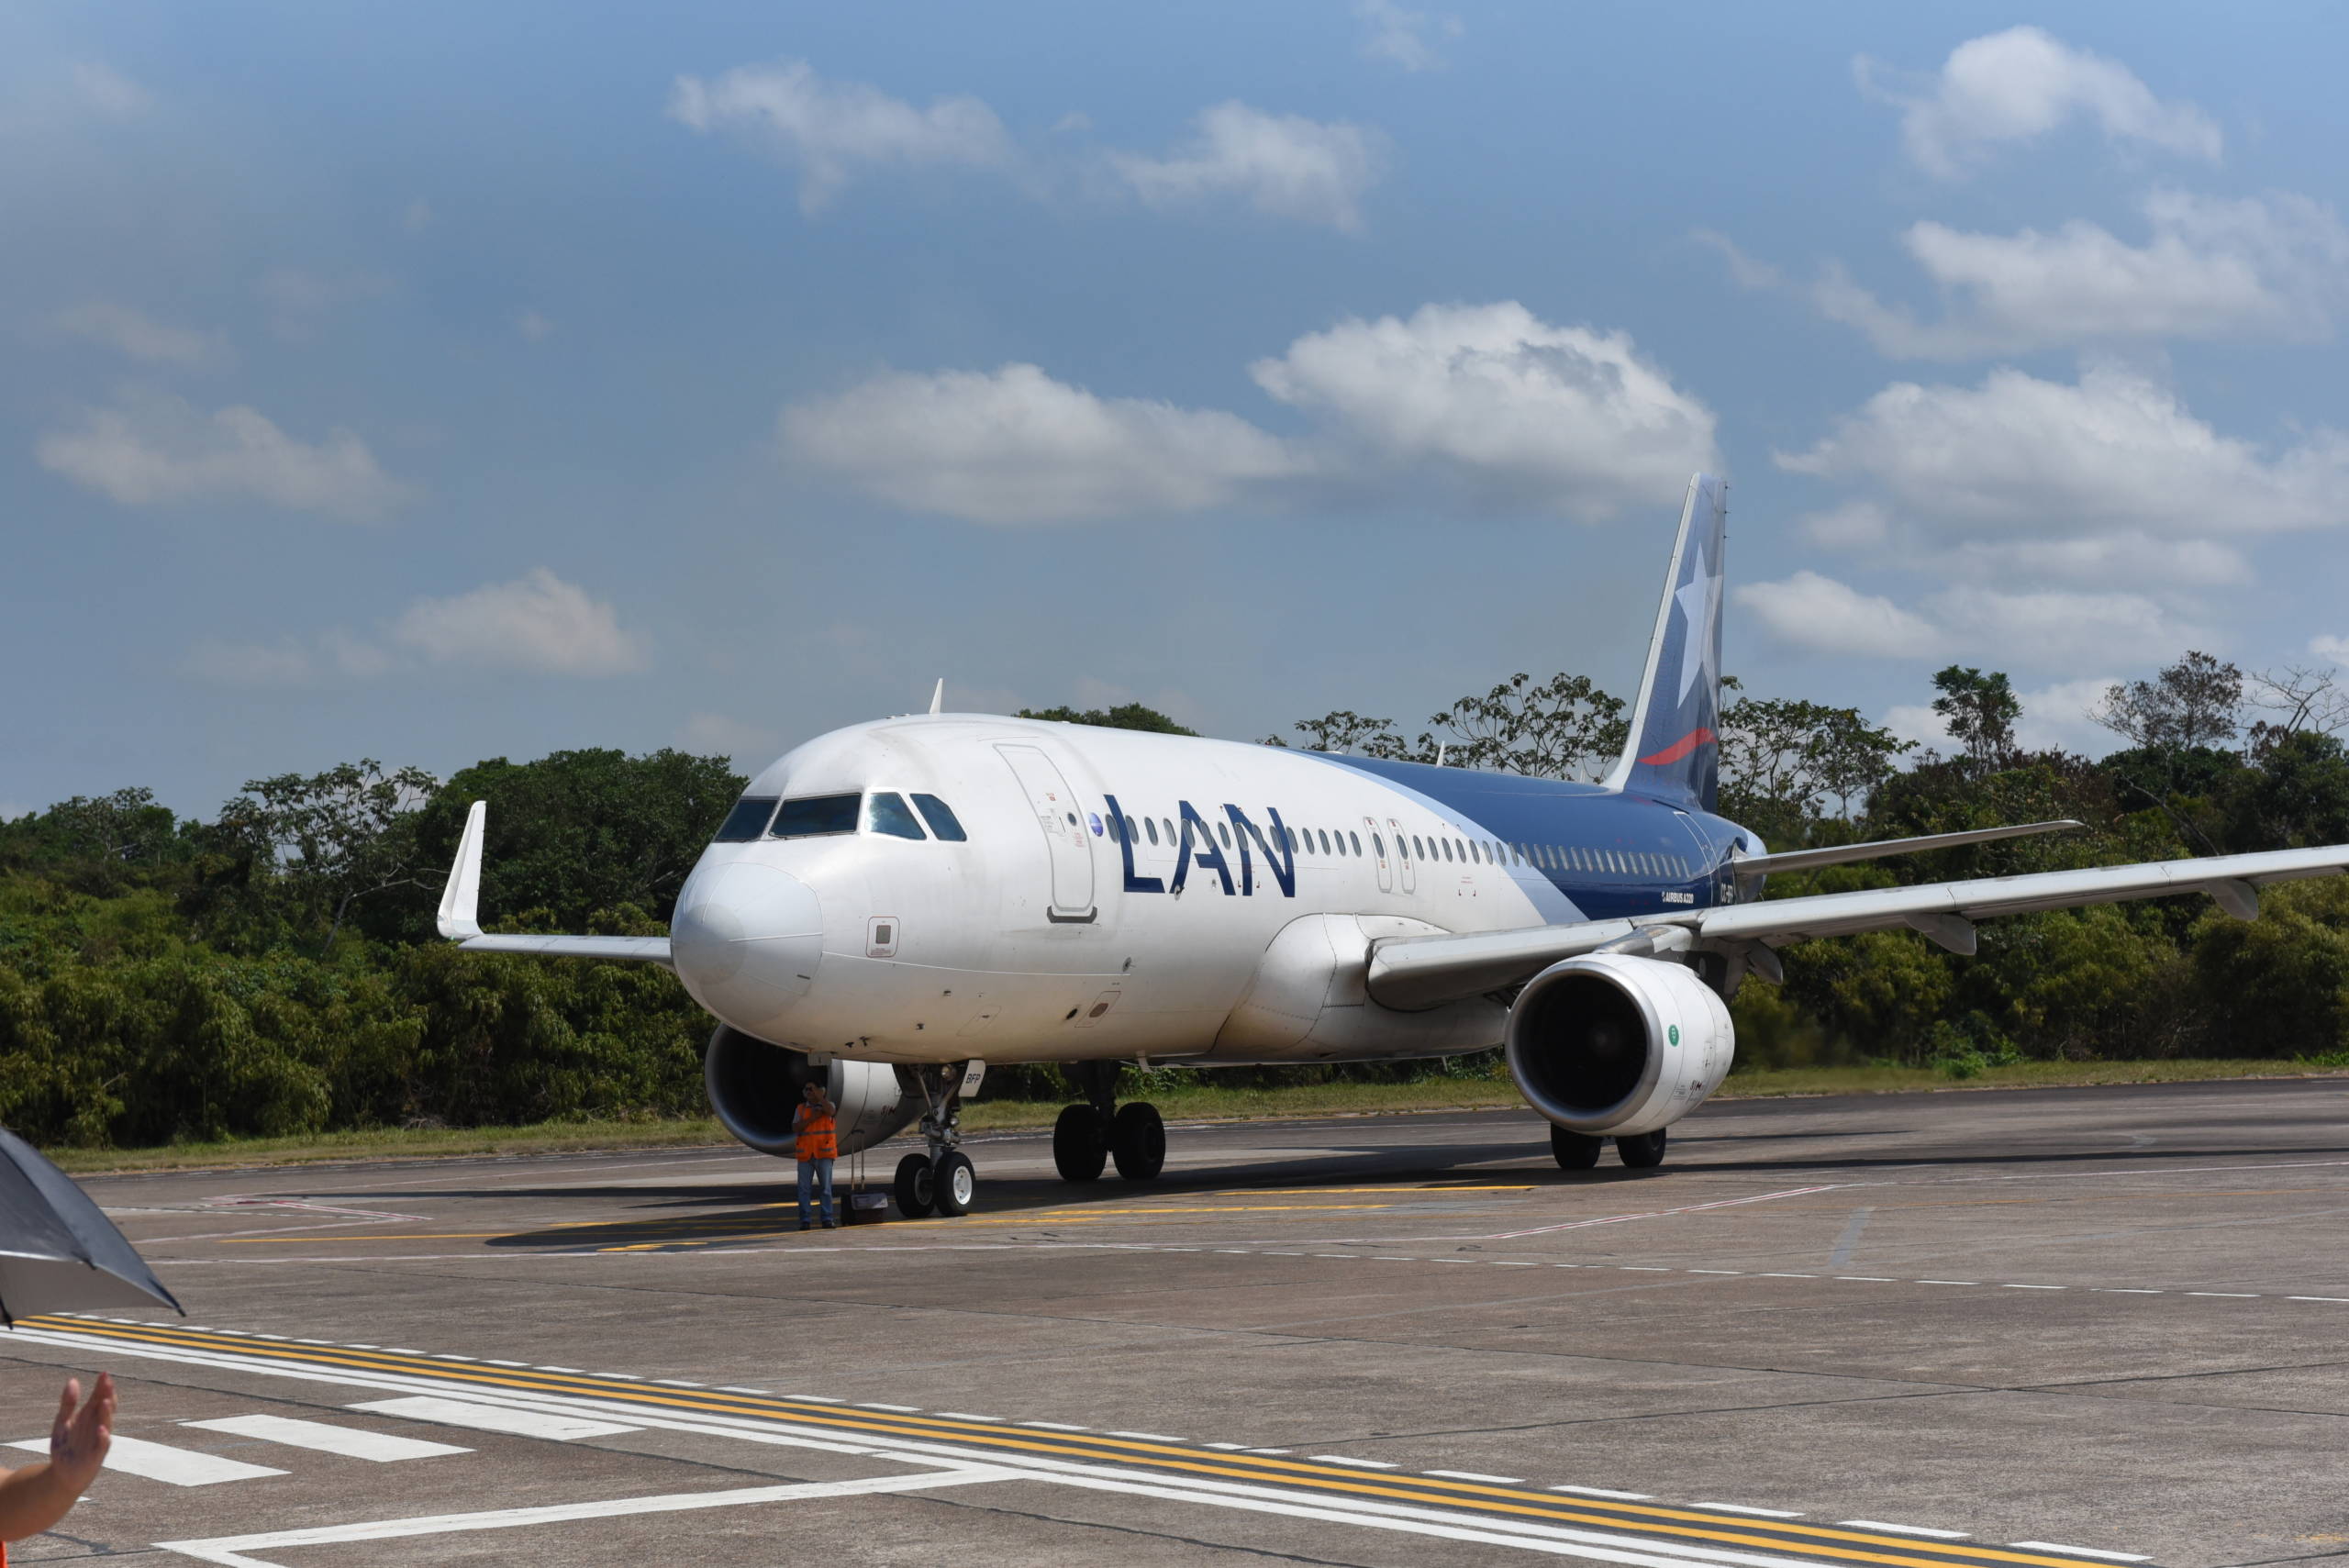 A LATAM Airlines Airbus 320 seen at Puerto Maldonado airport